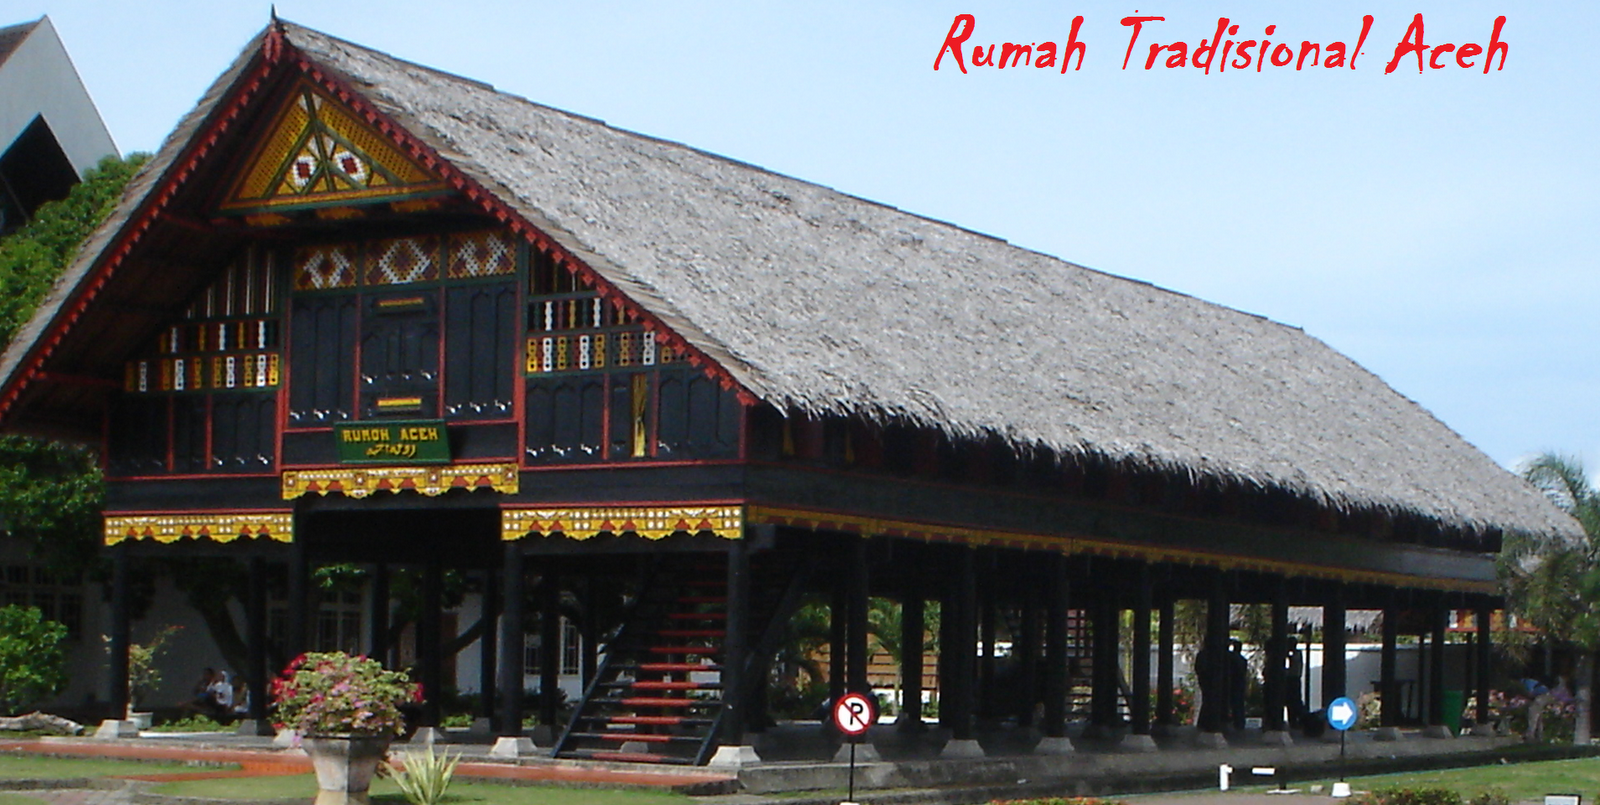 Berikut gambar rumah tradisional khas adat aceh.